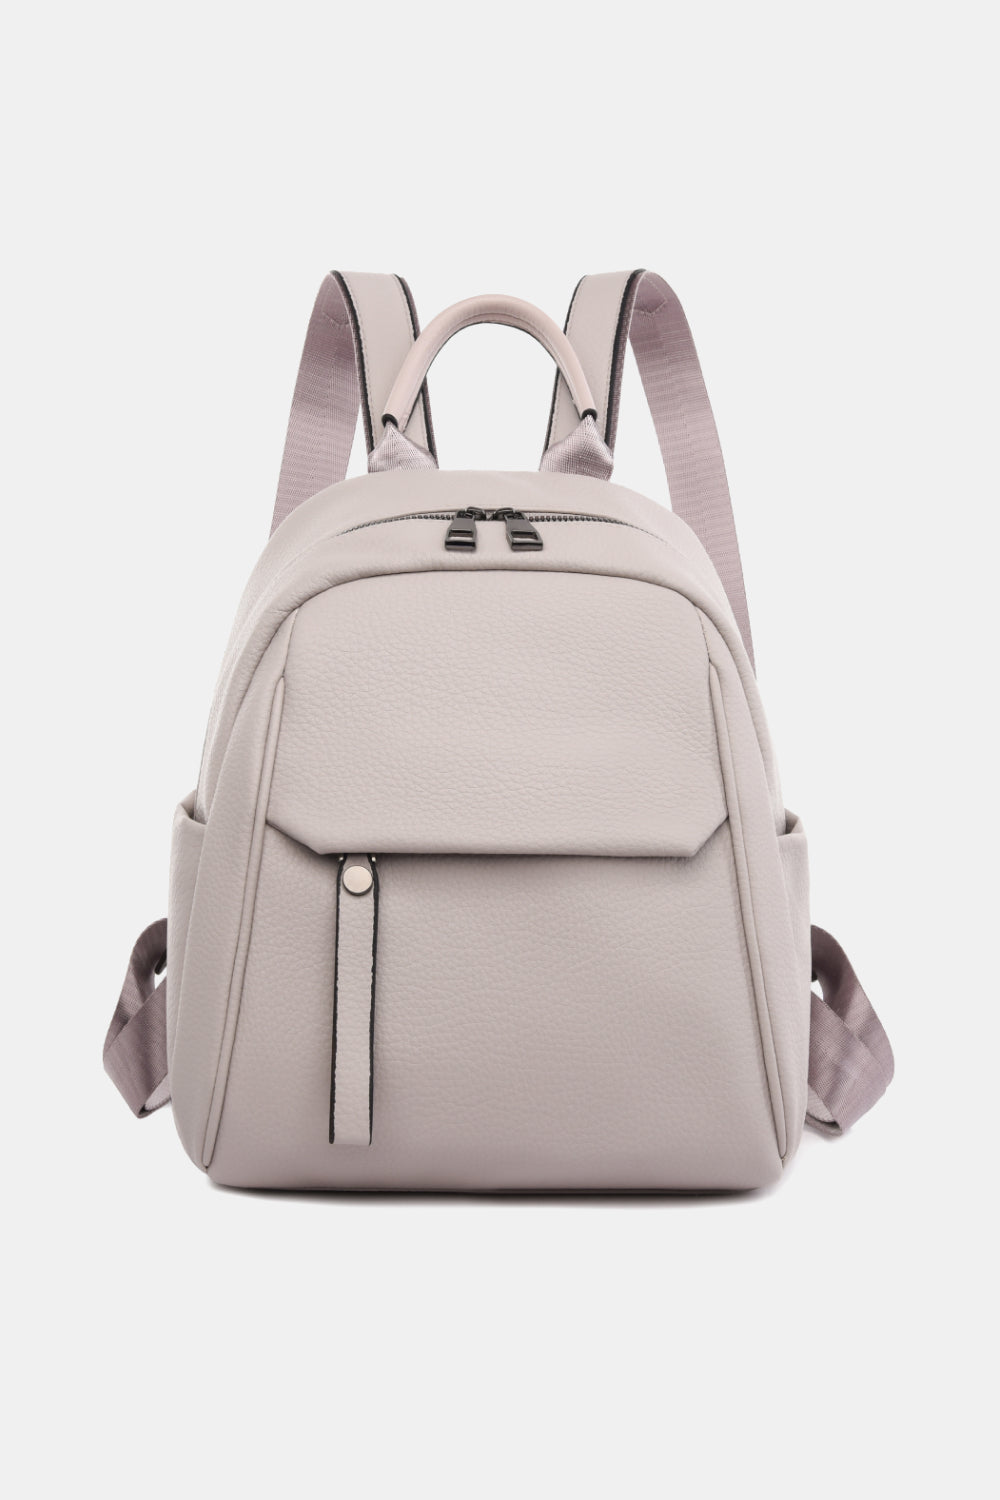 Medium PU Leather Backpack - Fashion BTQ